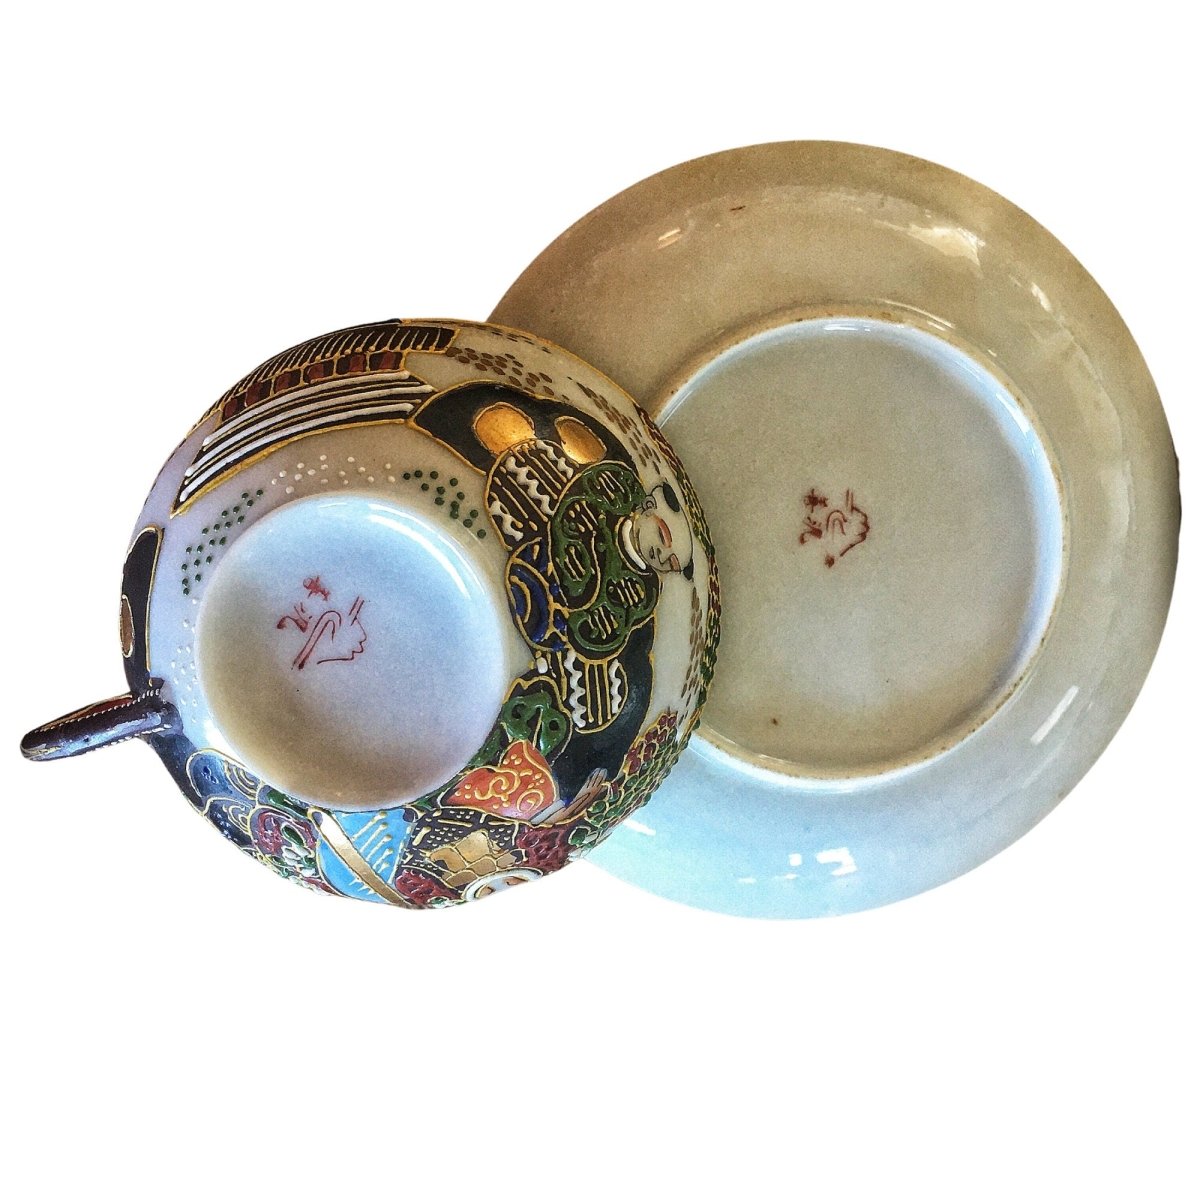 Vintage Kutani Japanese Teacup & Saucer with Moriage and gold leaf on Eggshell Porcelain, c. 1920 - Chinamania.shop